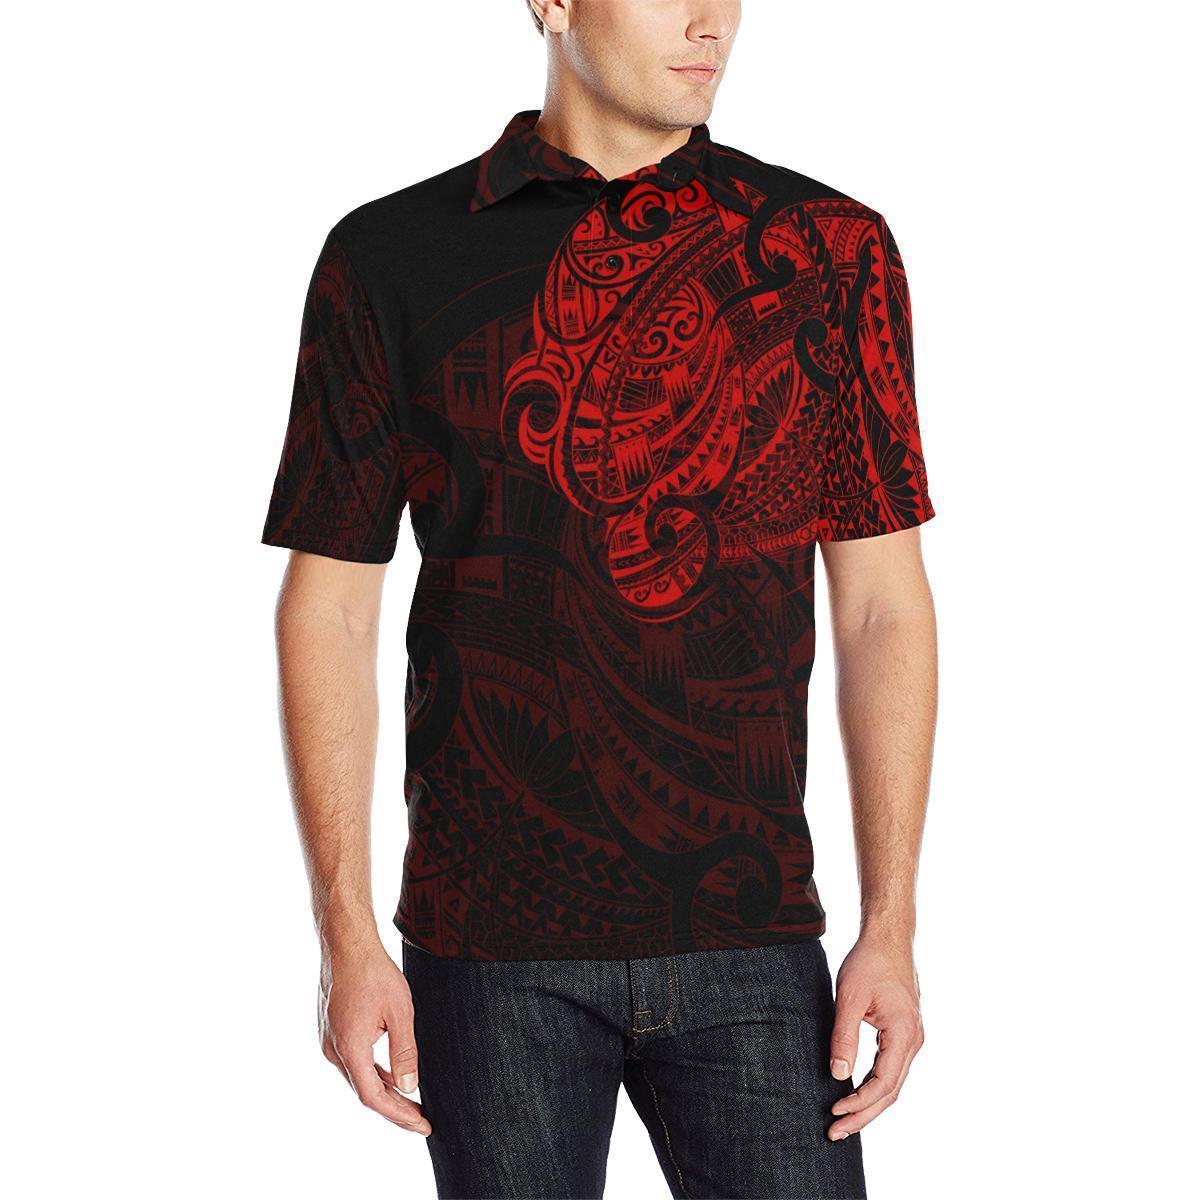 Maori Tattoo Style Black and Red Polo T Shirt Unisex Black - Polynesian Pride